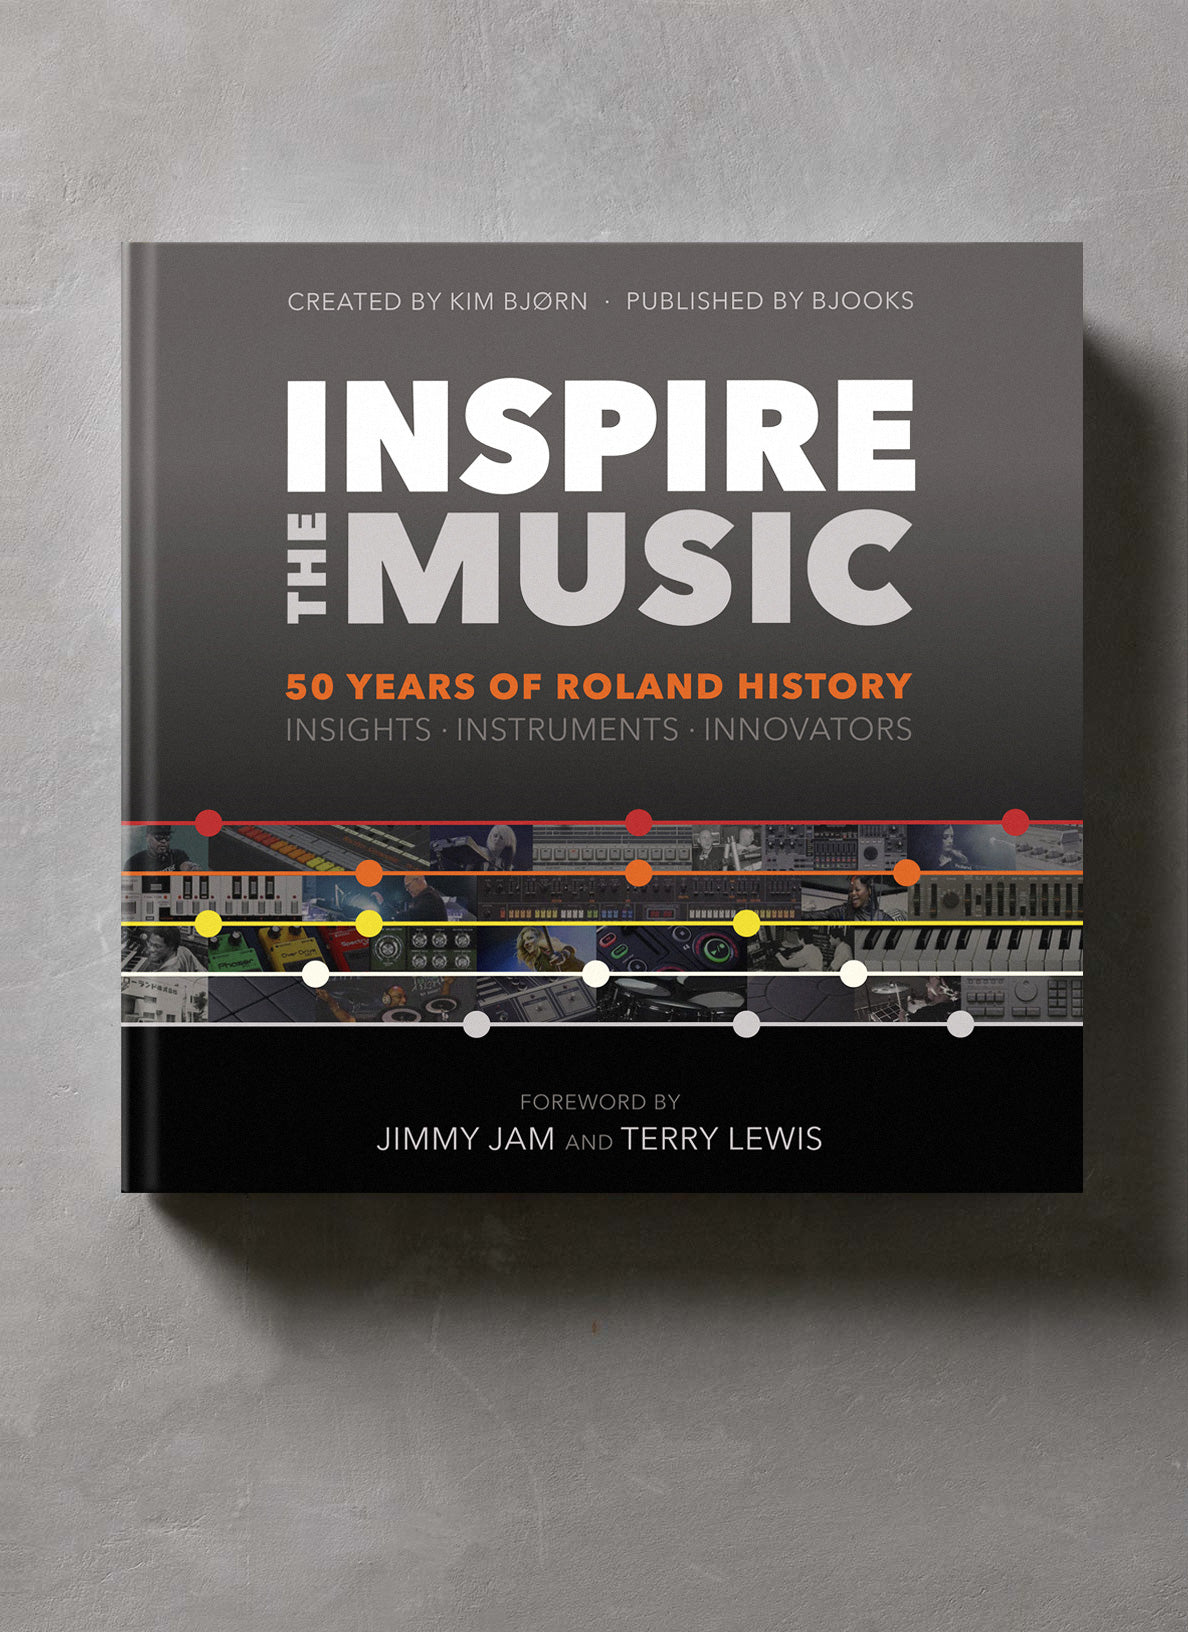 INSPIRE THE MUSIC - 50 YEARS OF ROLAND HISTORY – BJOOKS